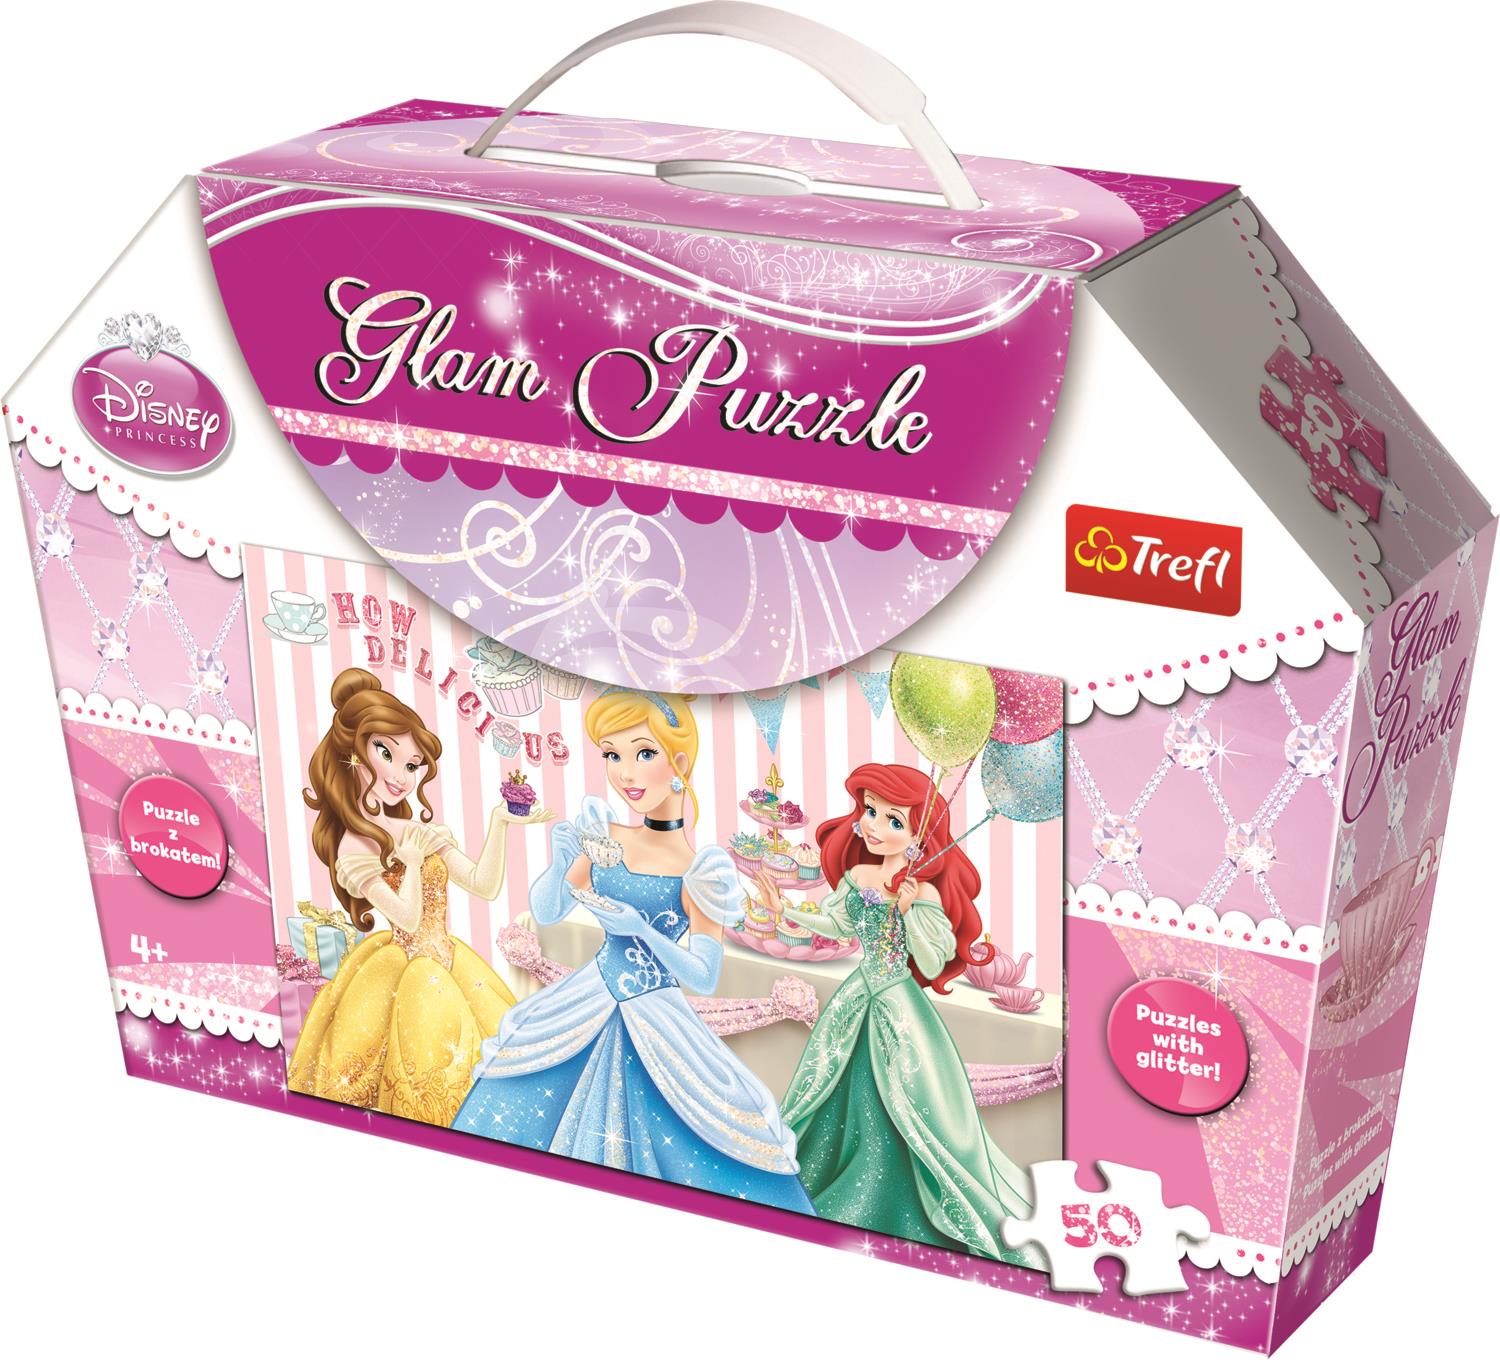 Trefl Çocuk Puzzle 14802 Princess, Disney 50 Parça Glam Puzzle